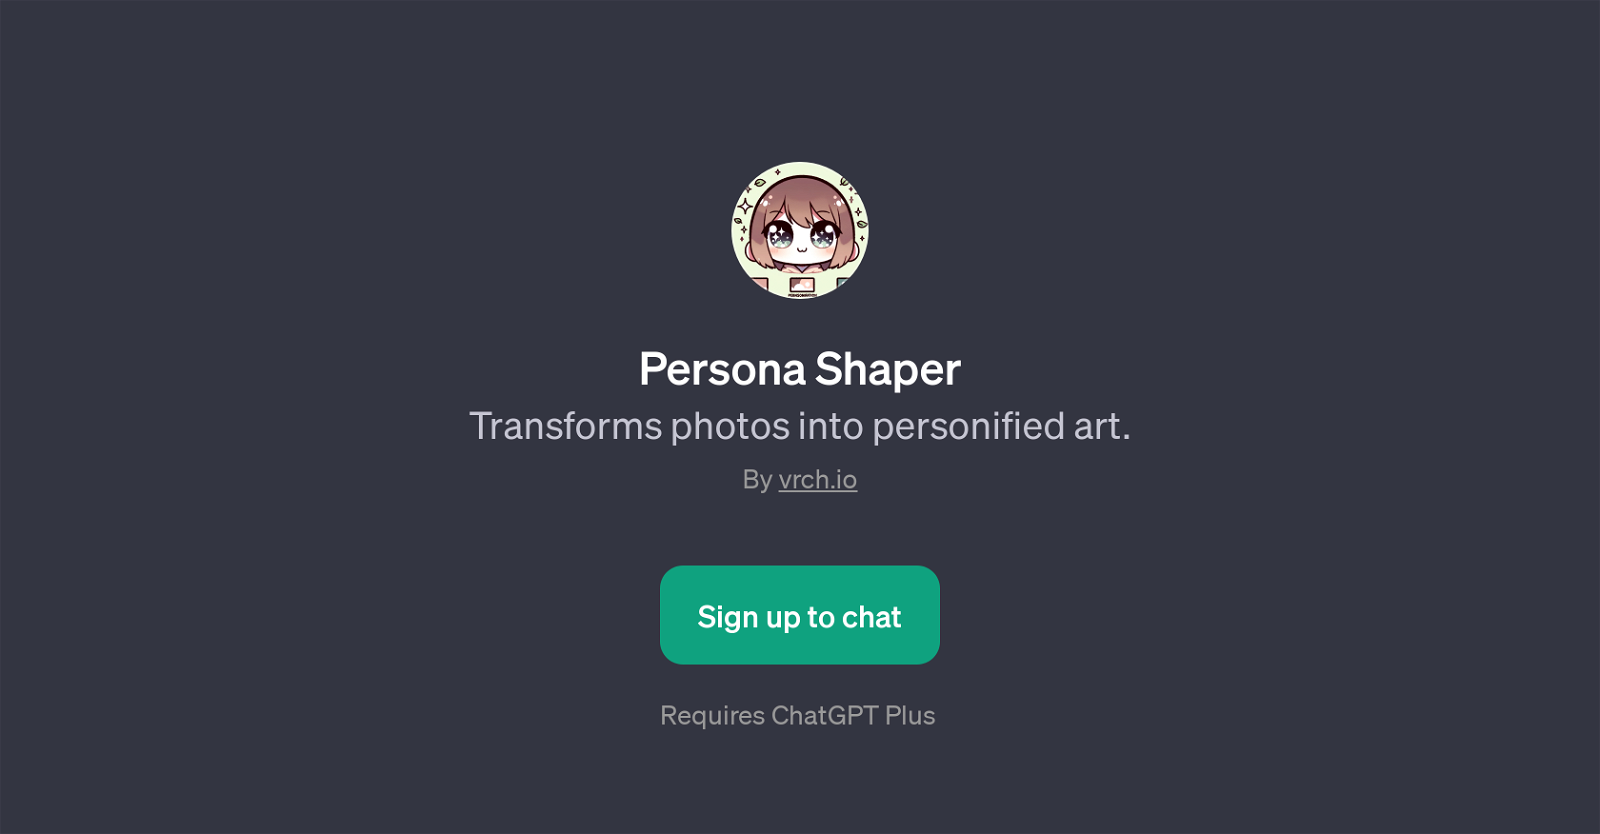 Persona Shaper website